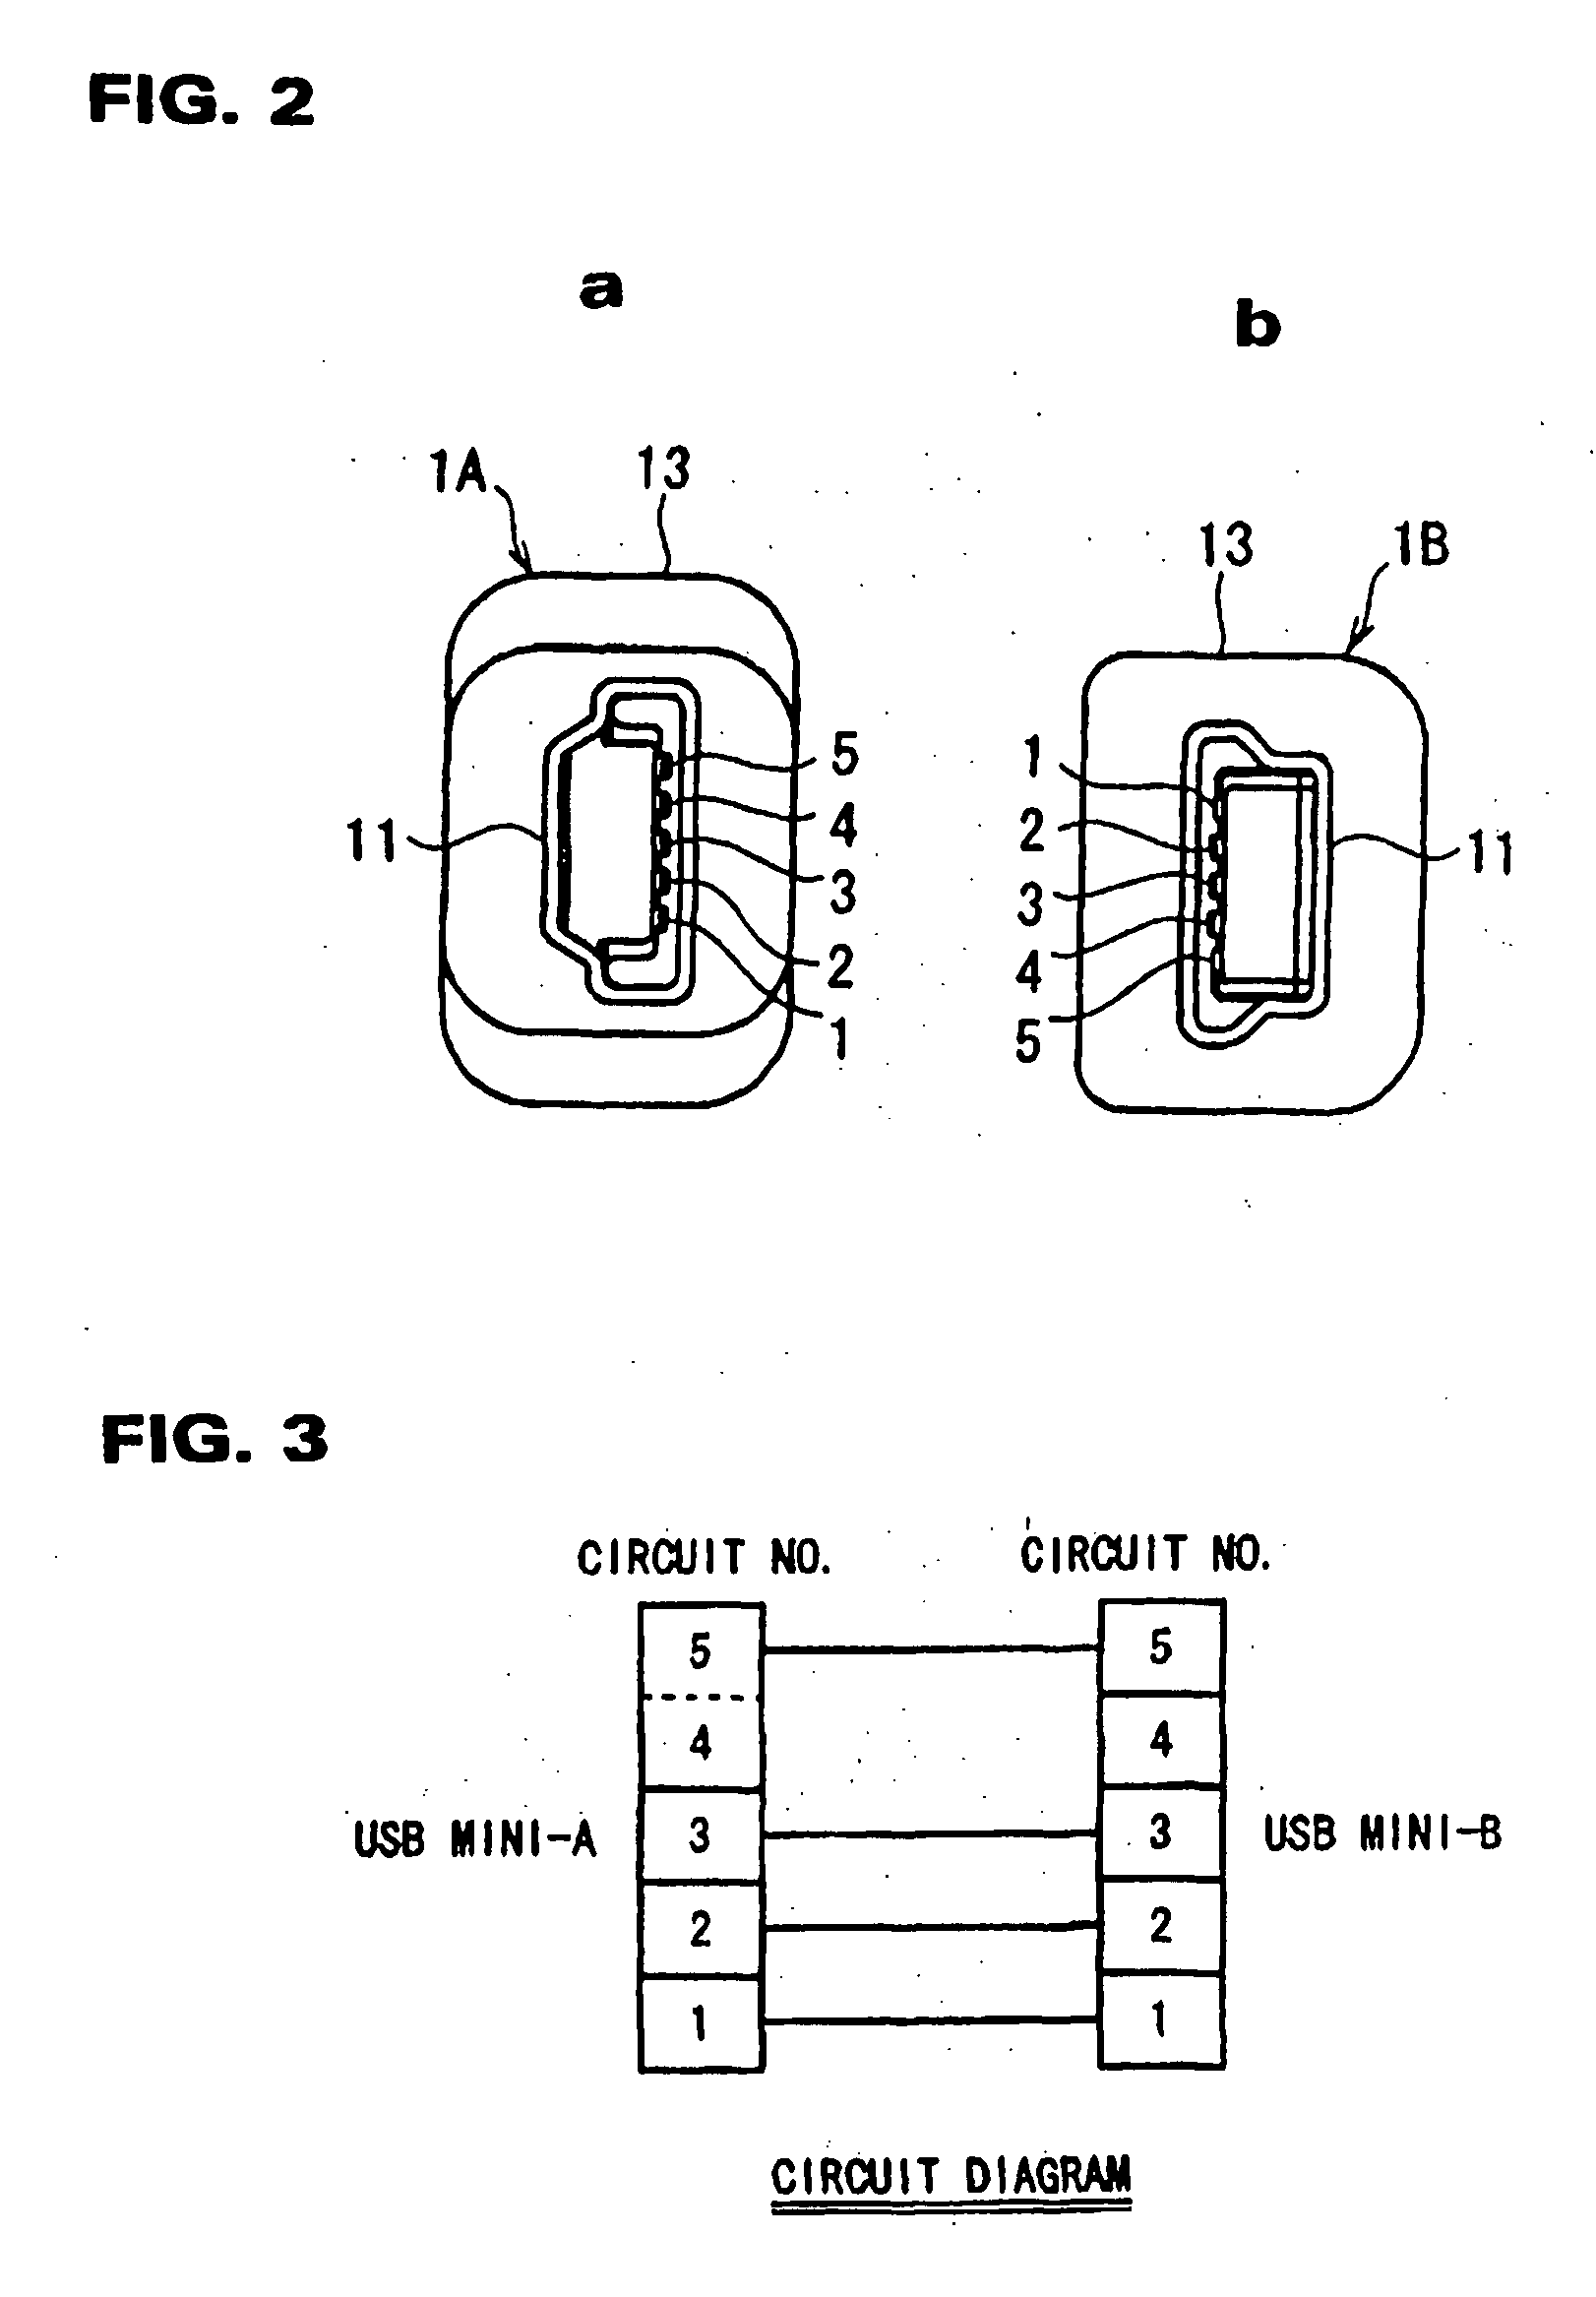 Miniaturized connector